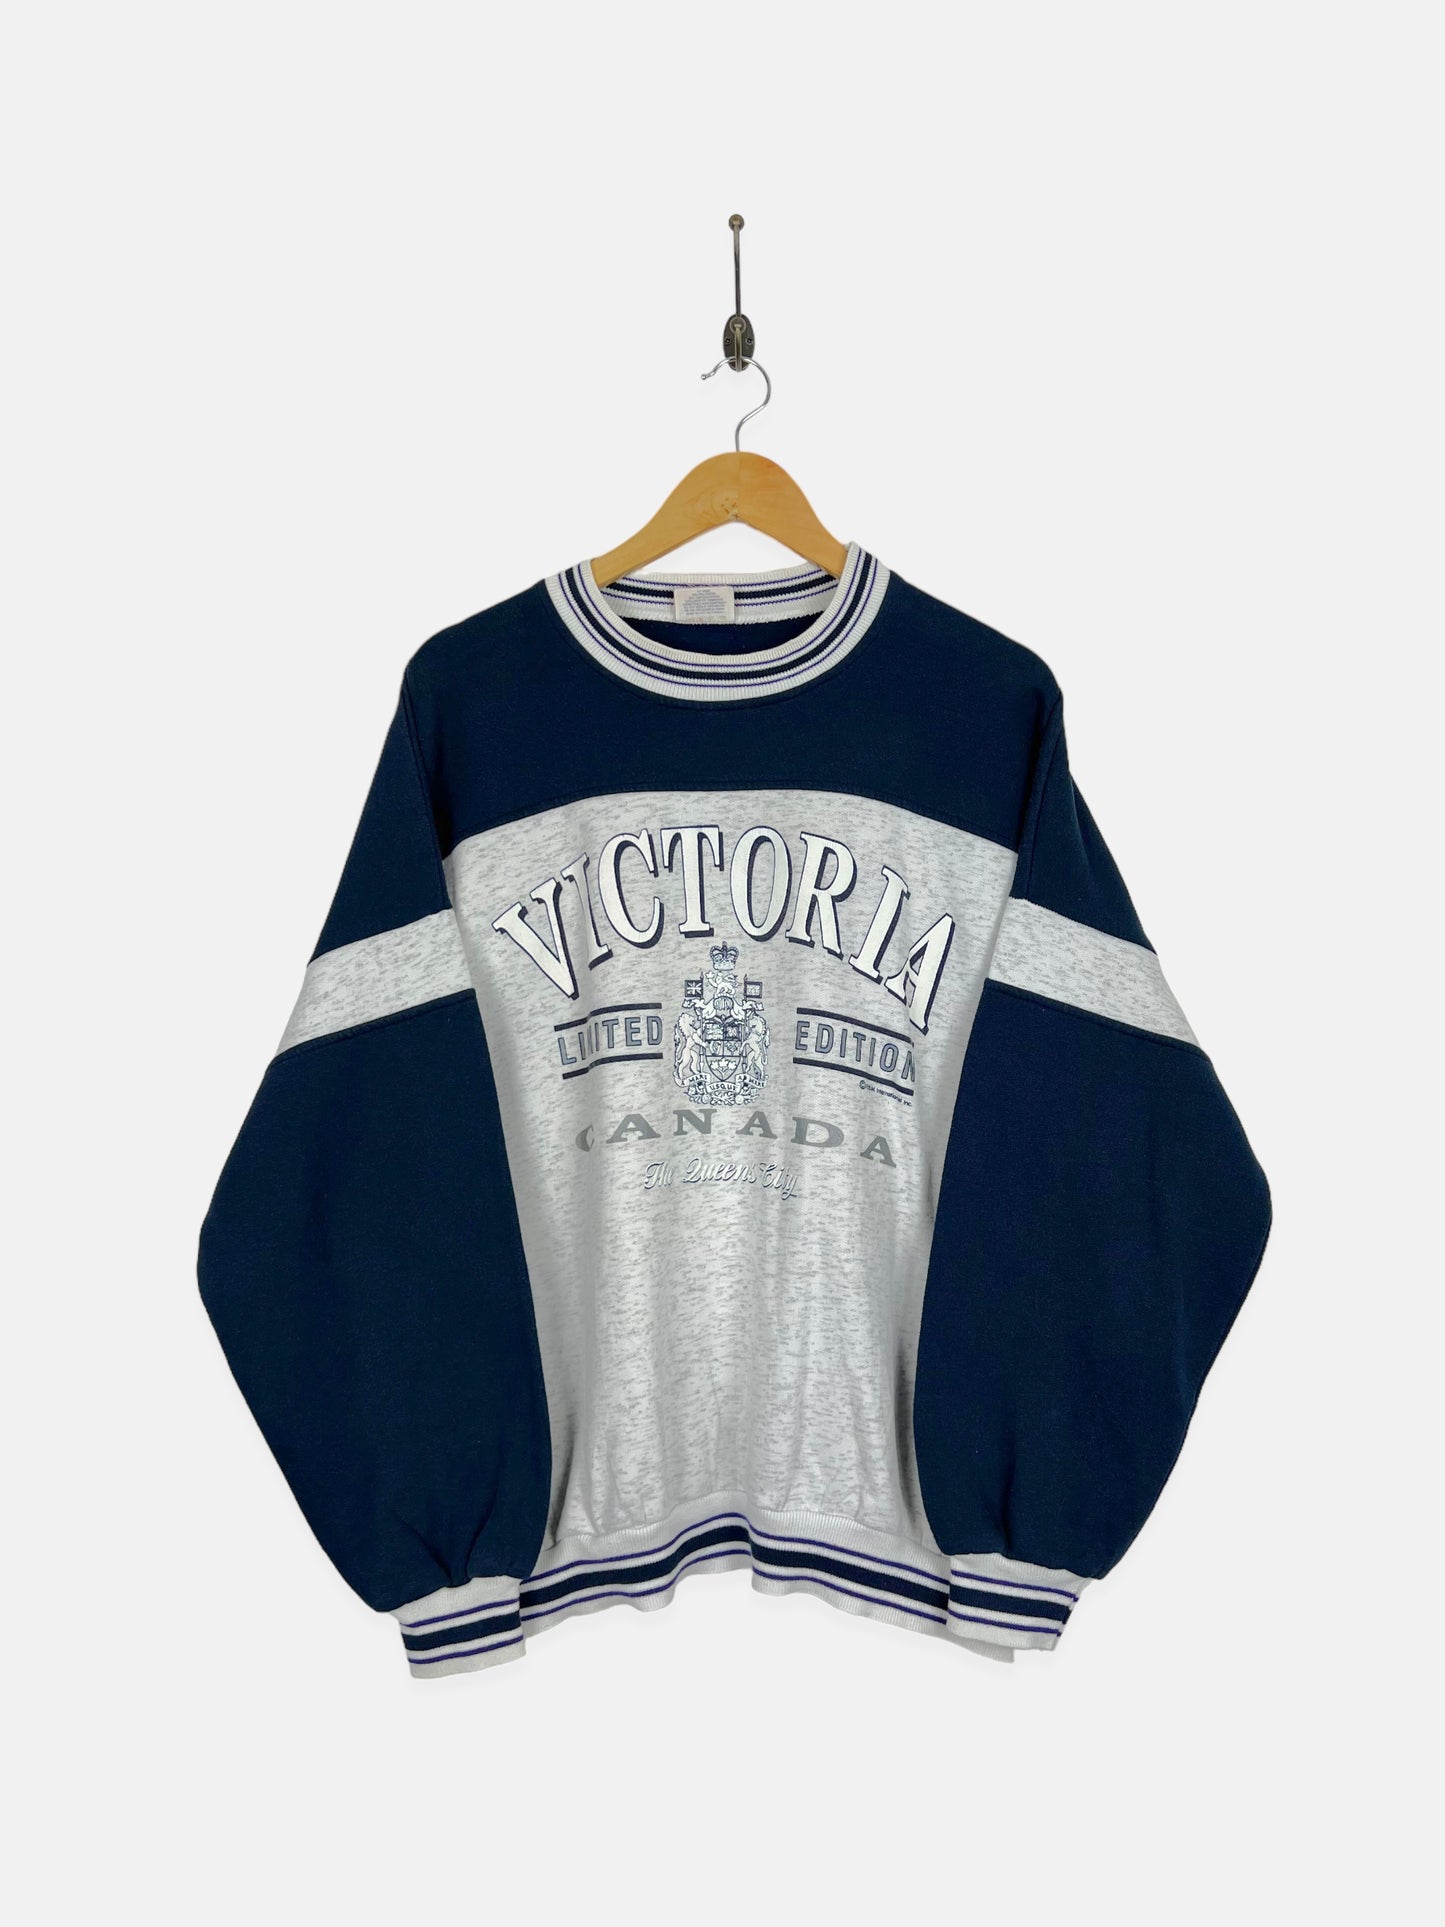 90's Victoria Canada Made Vintage Sweatshirt Size L